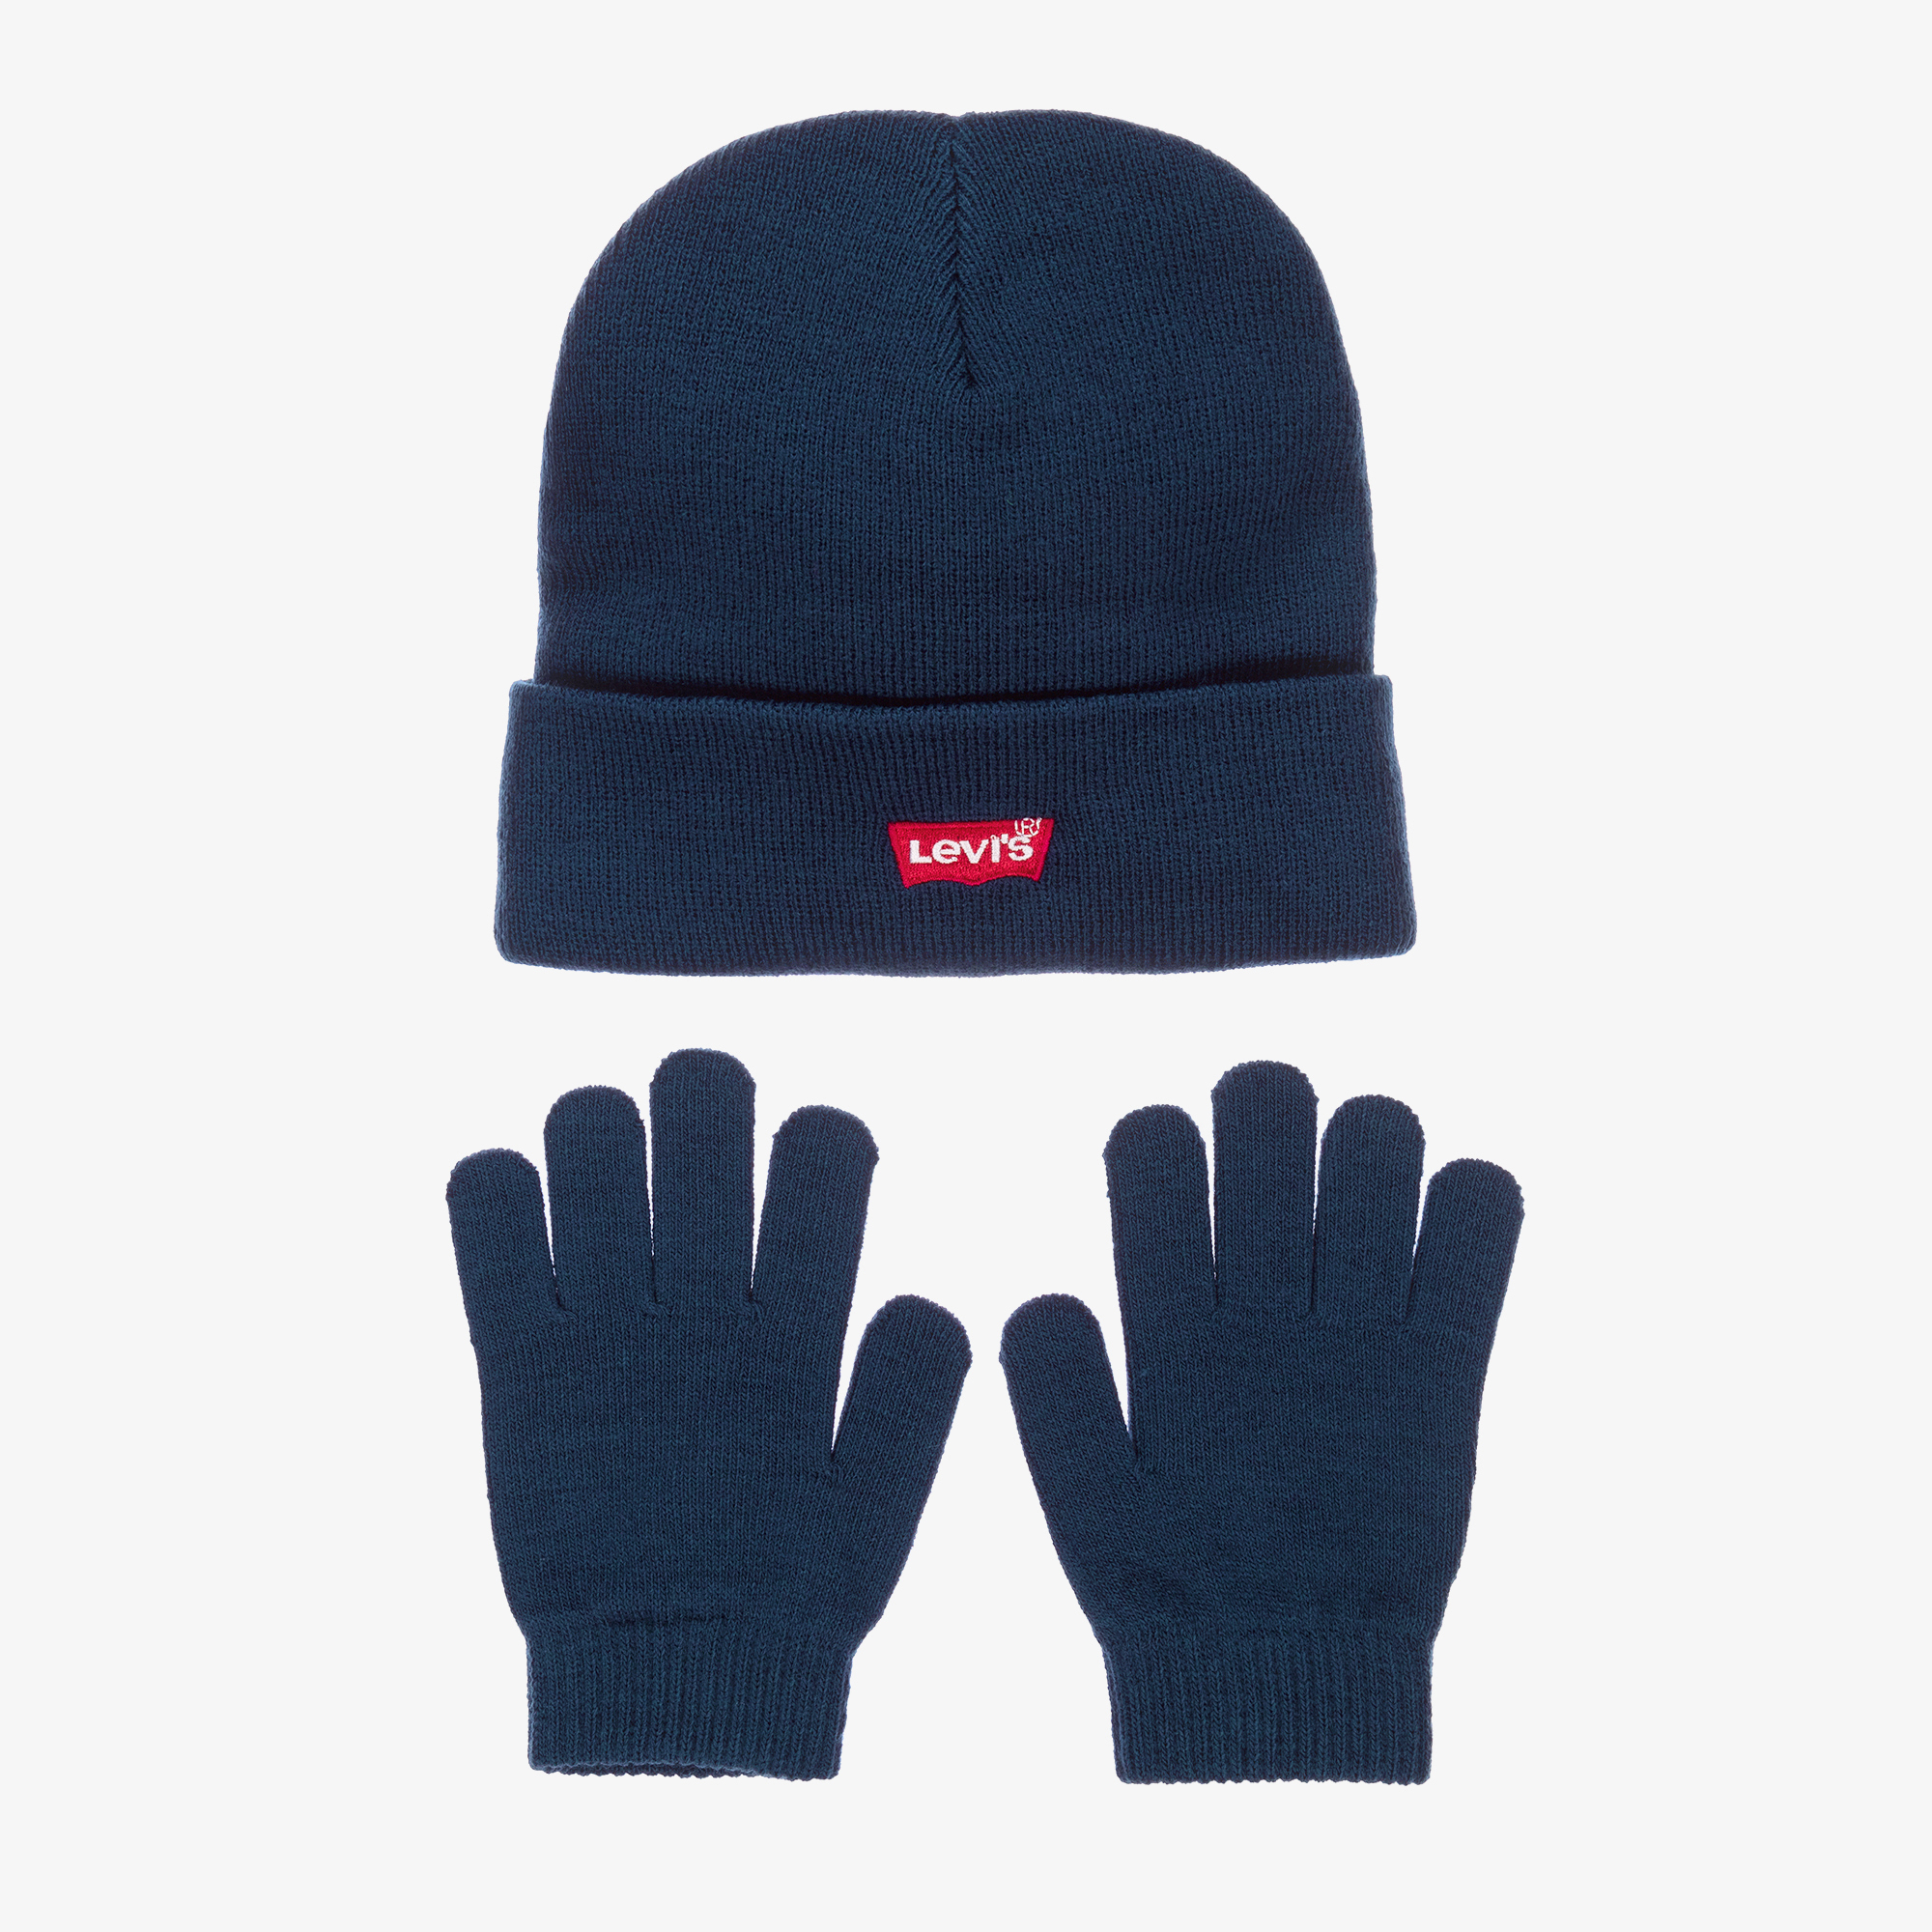 Levi's - Ensemble bonnet gants marine